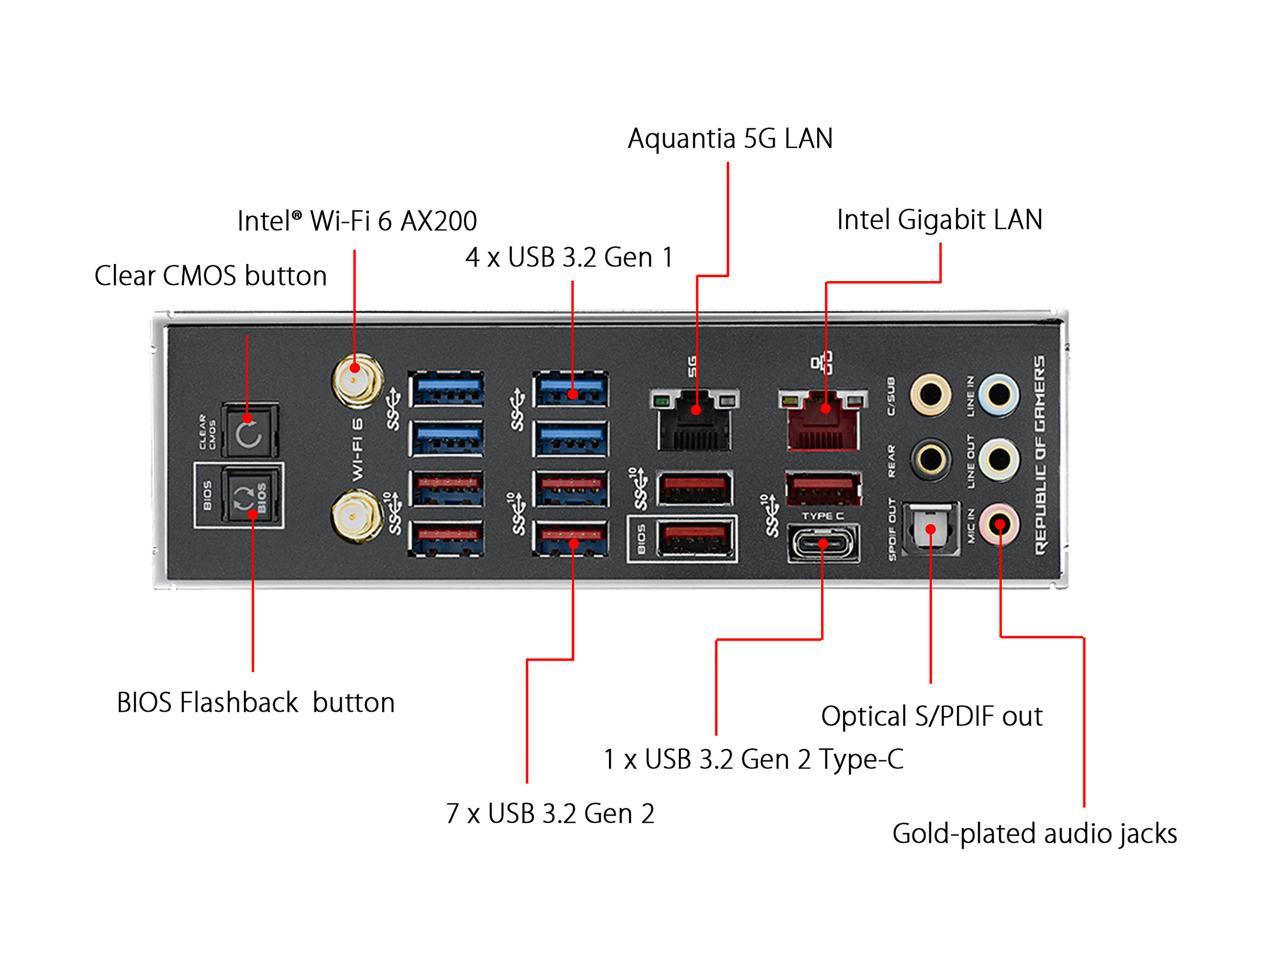 Asus Rog Crosshair Viii Formula Amd X570 Am4 Atx Motherboard With Pcie 4.0, Dual M.2, Sata 6Gb/S, Usb 3.2 Gen 2, 5Gbps Lan, Wi-Fi 6